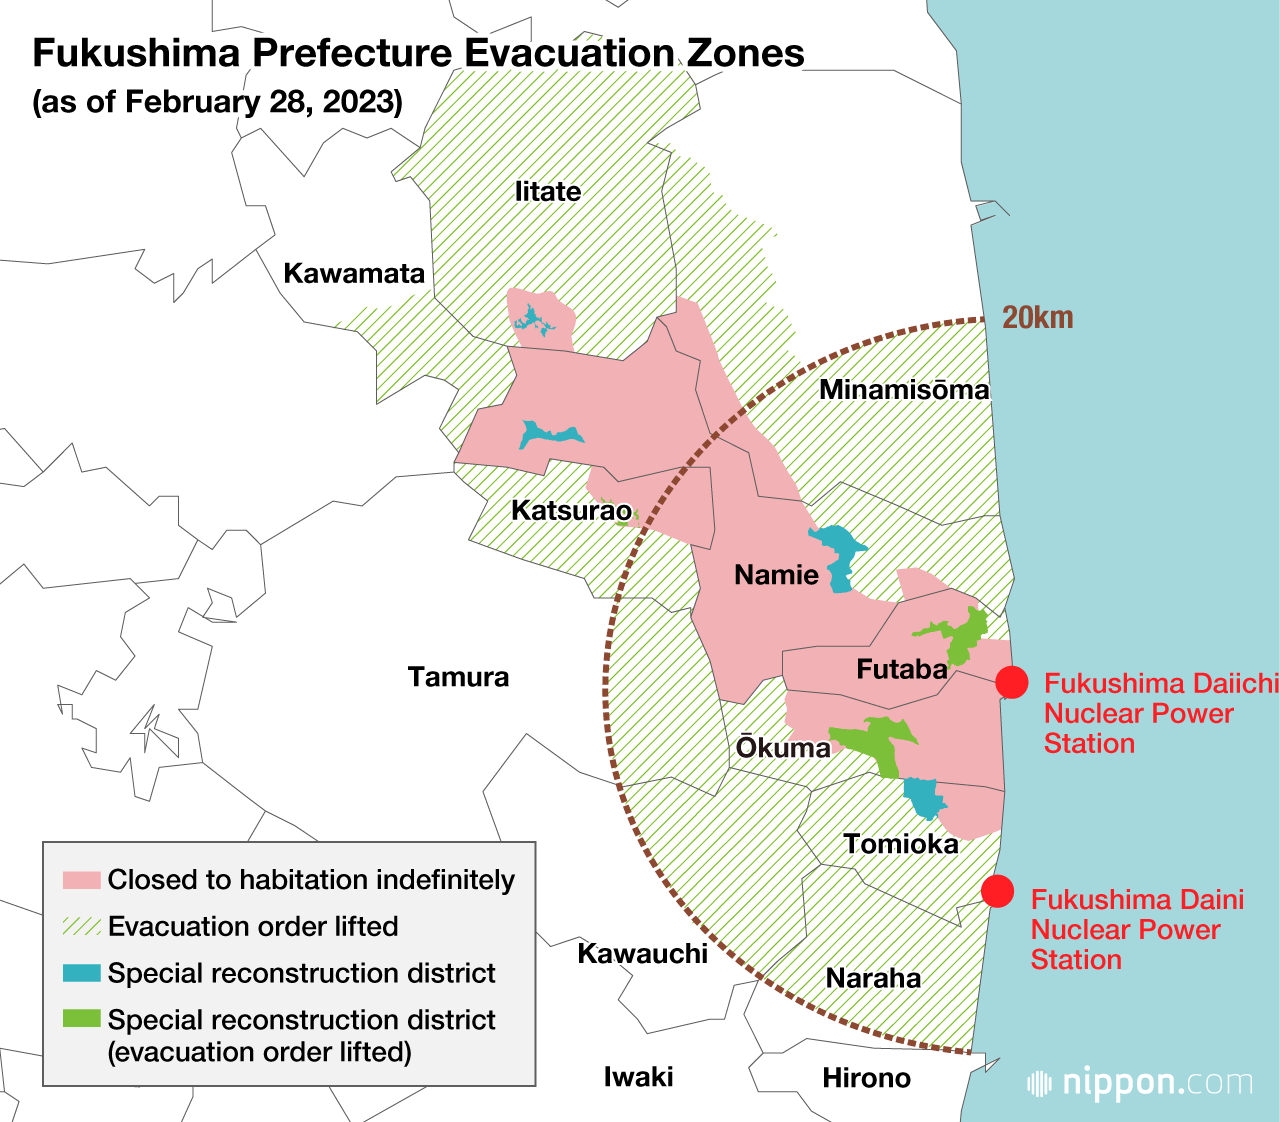 Fukushima Prefecture Evacuation Zones (as of February 28, 2023)